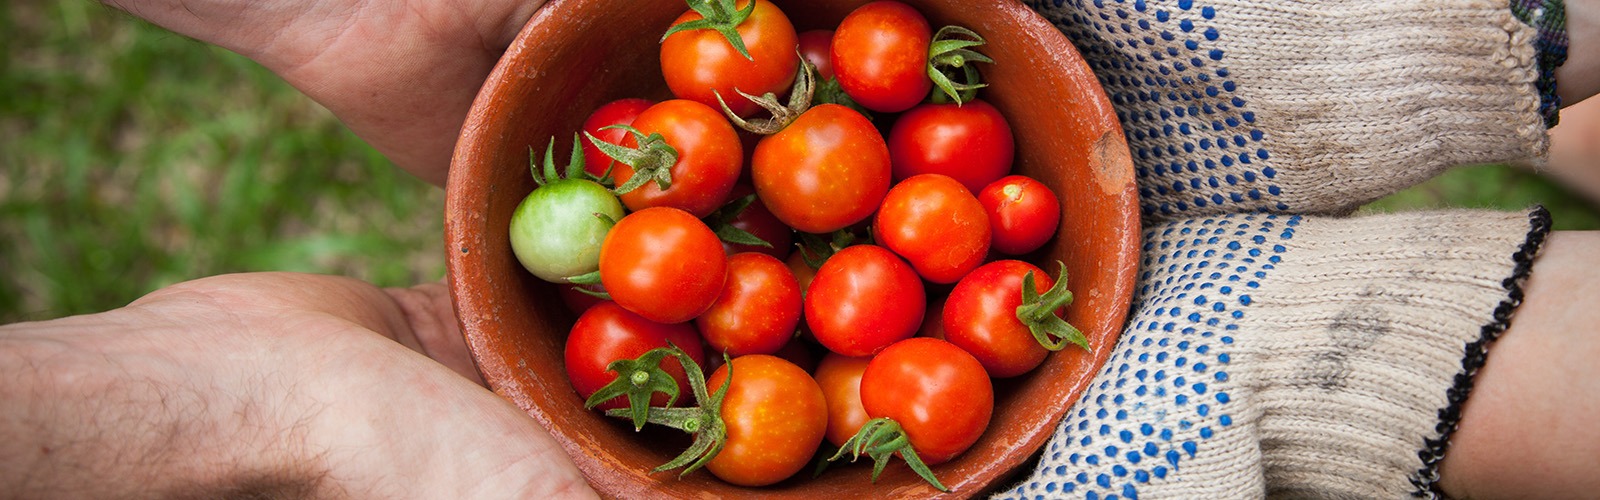 Bowl of tomatoes held in hands of gardeners 